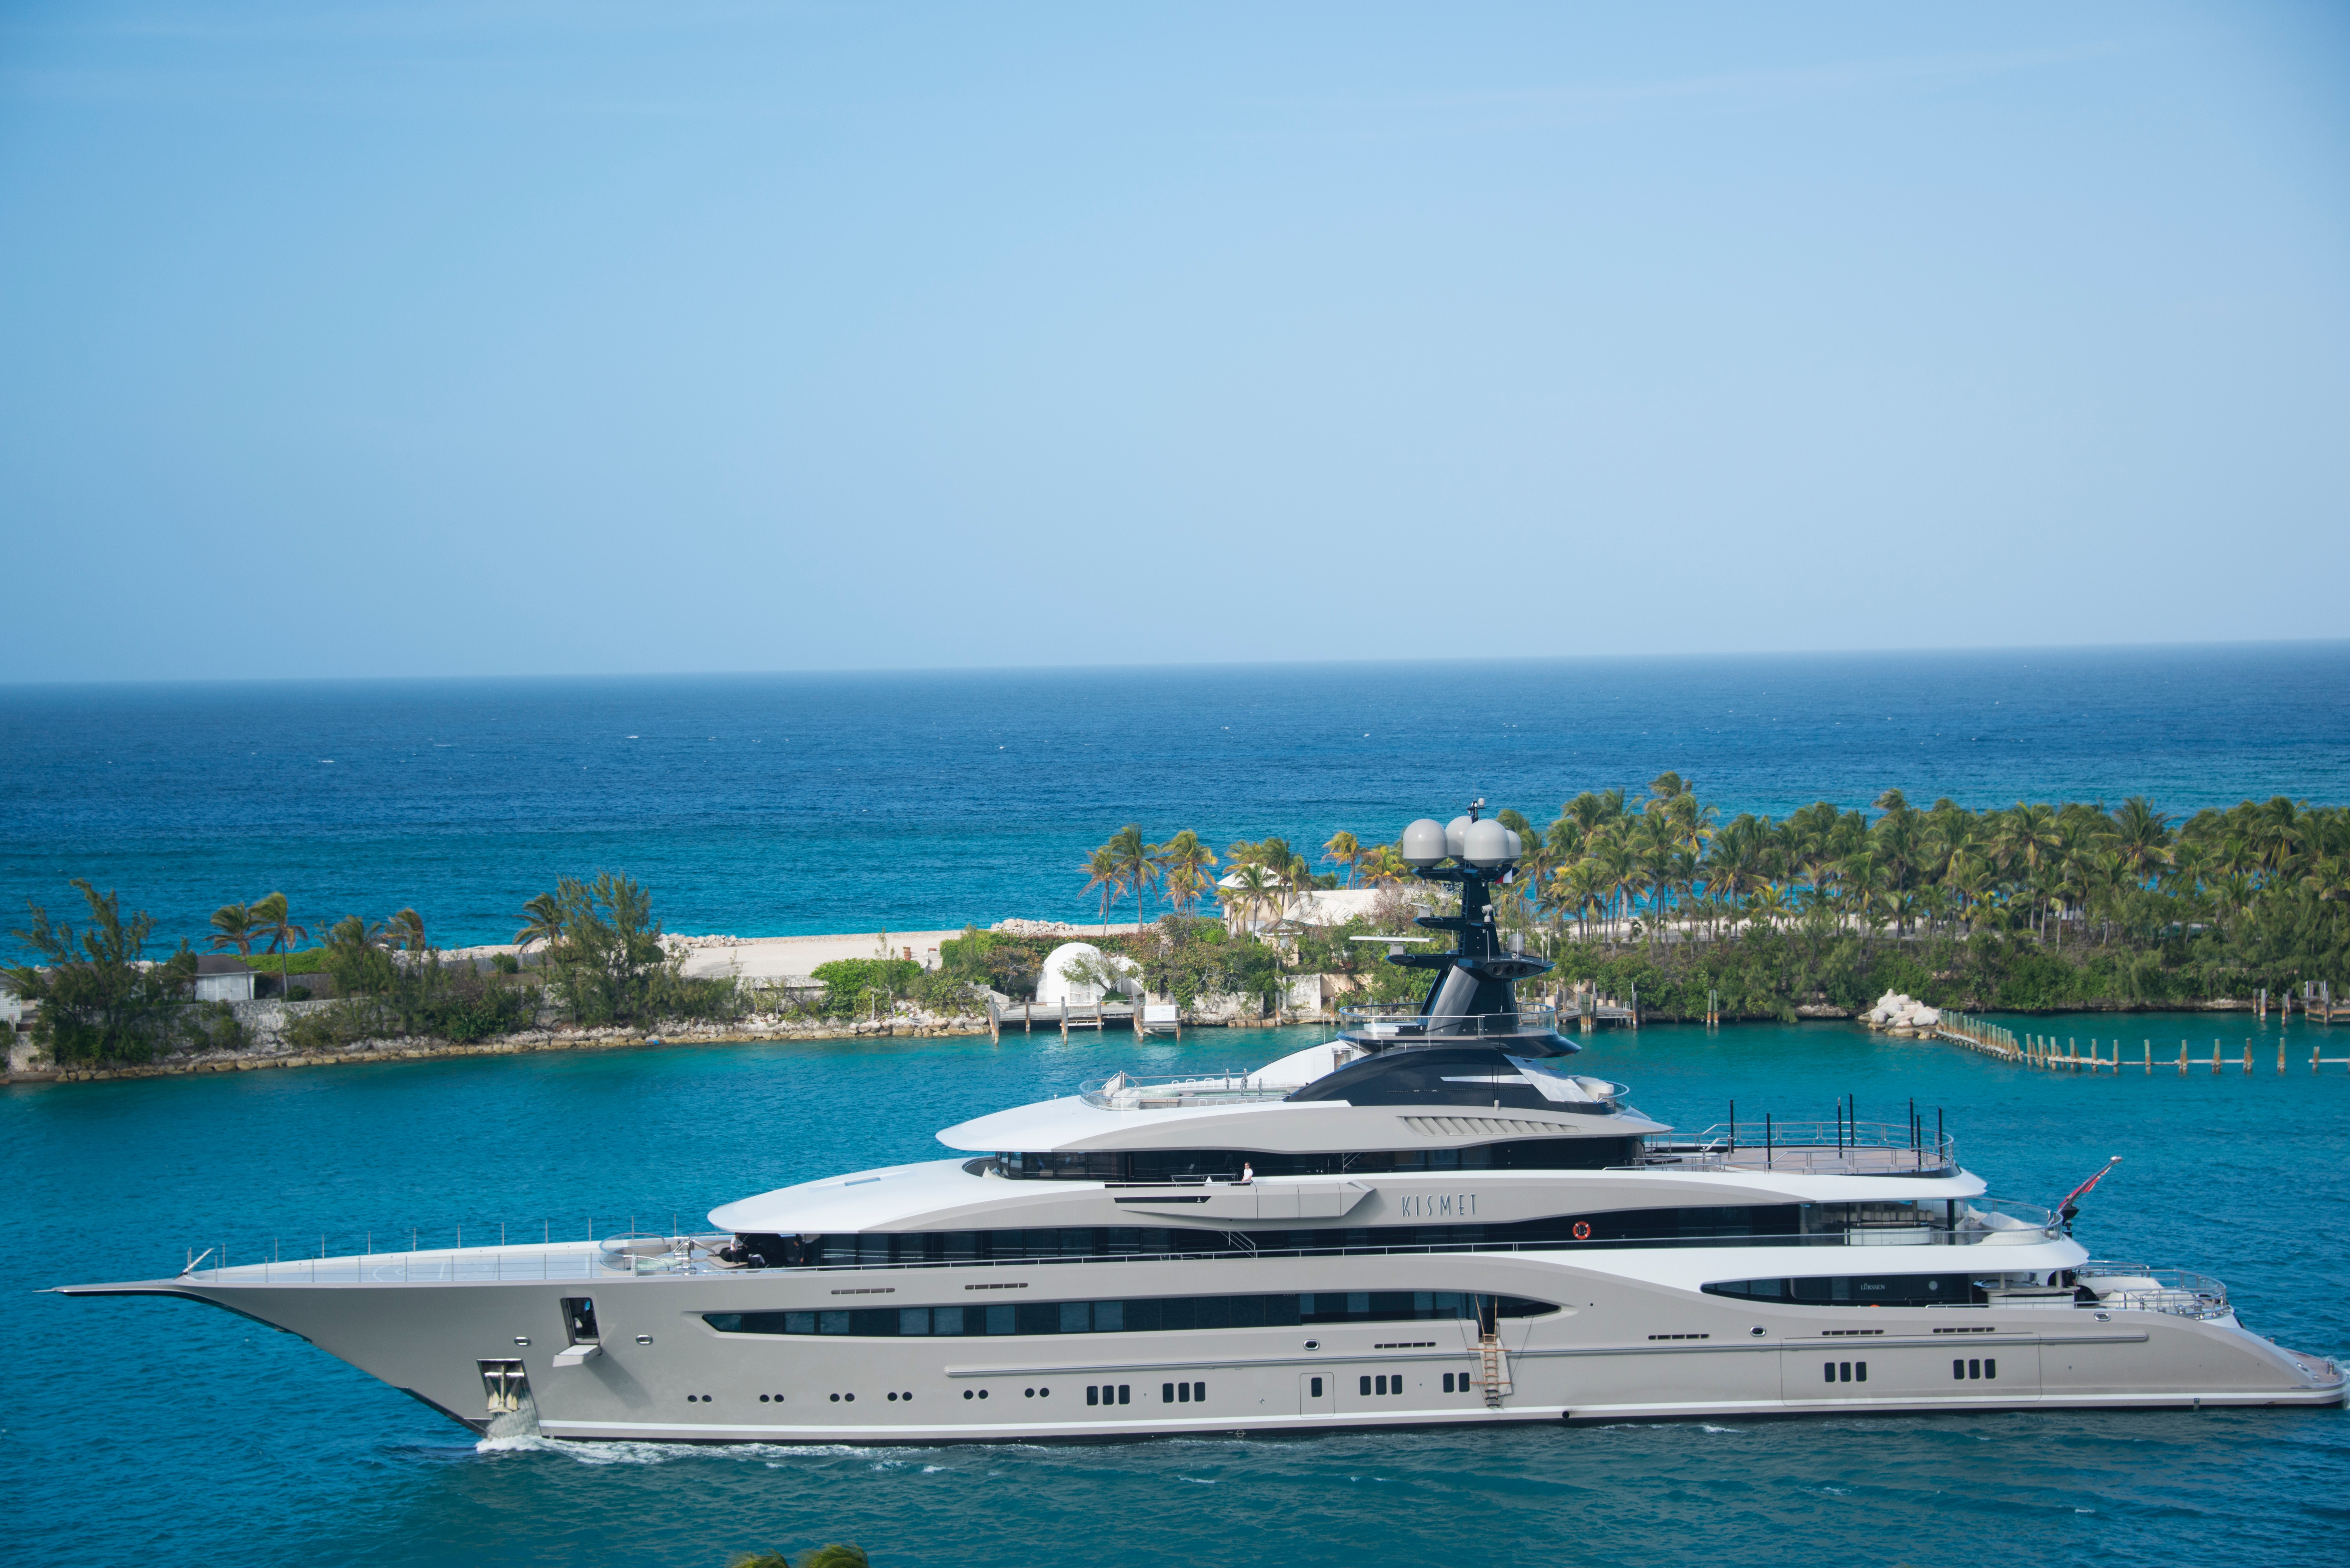 Best Luxury Yacht Photo · 100% Free Downloads